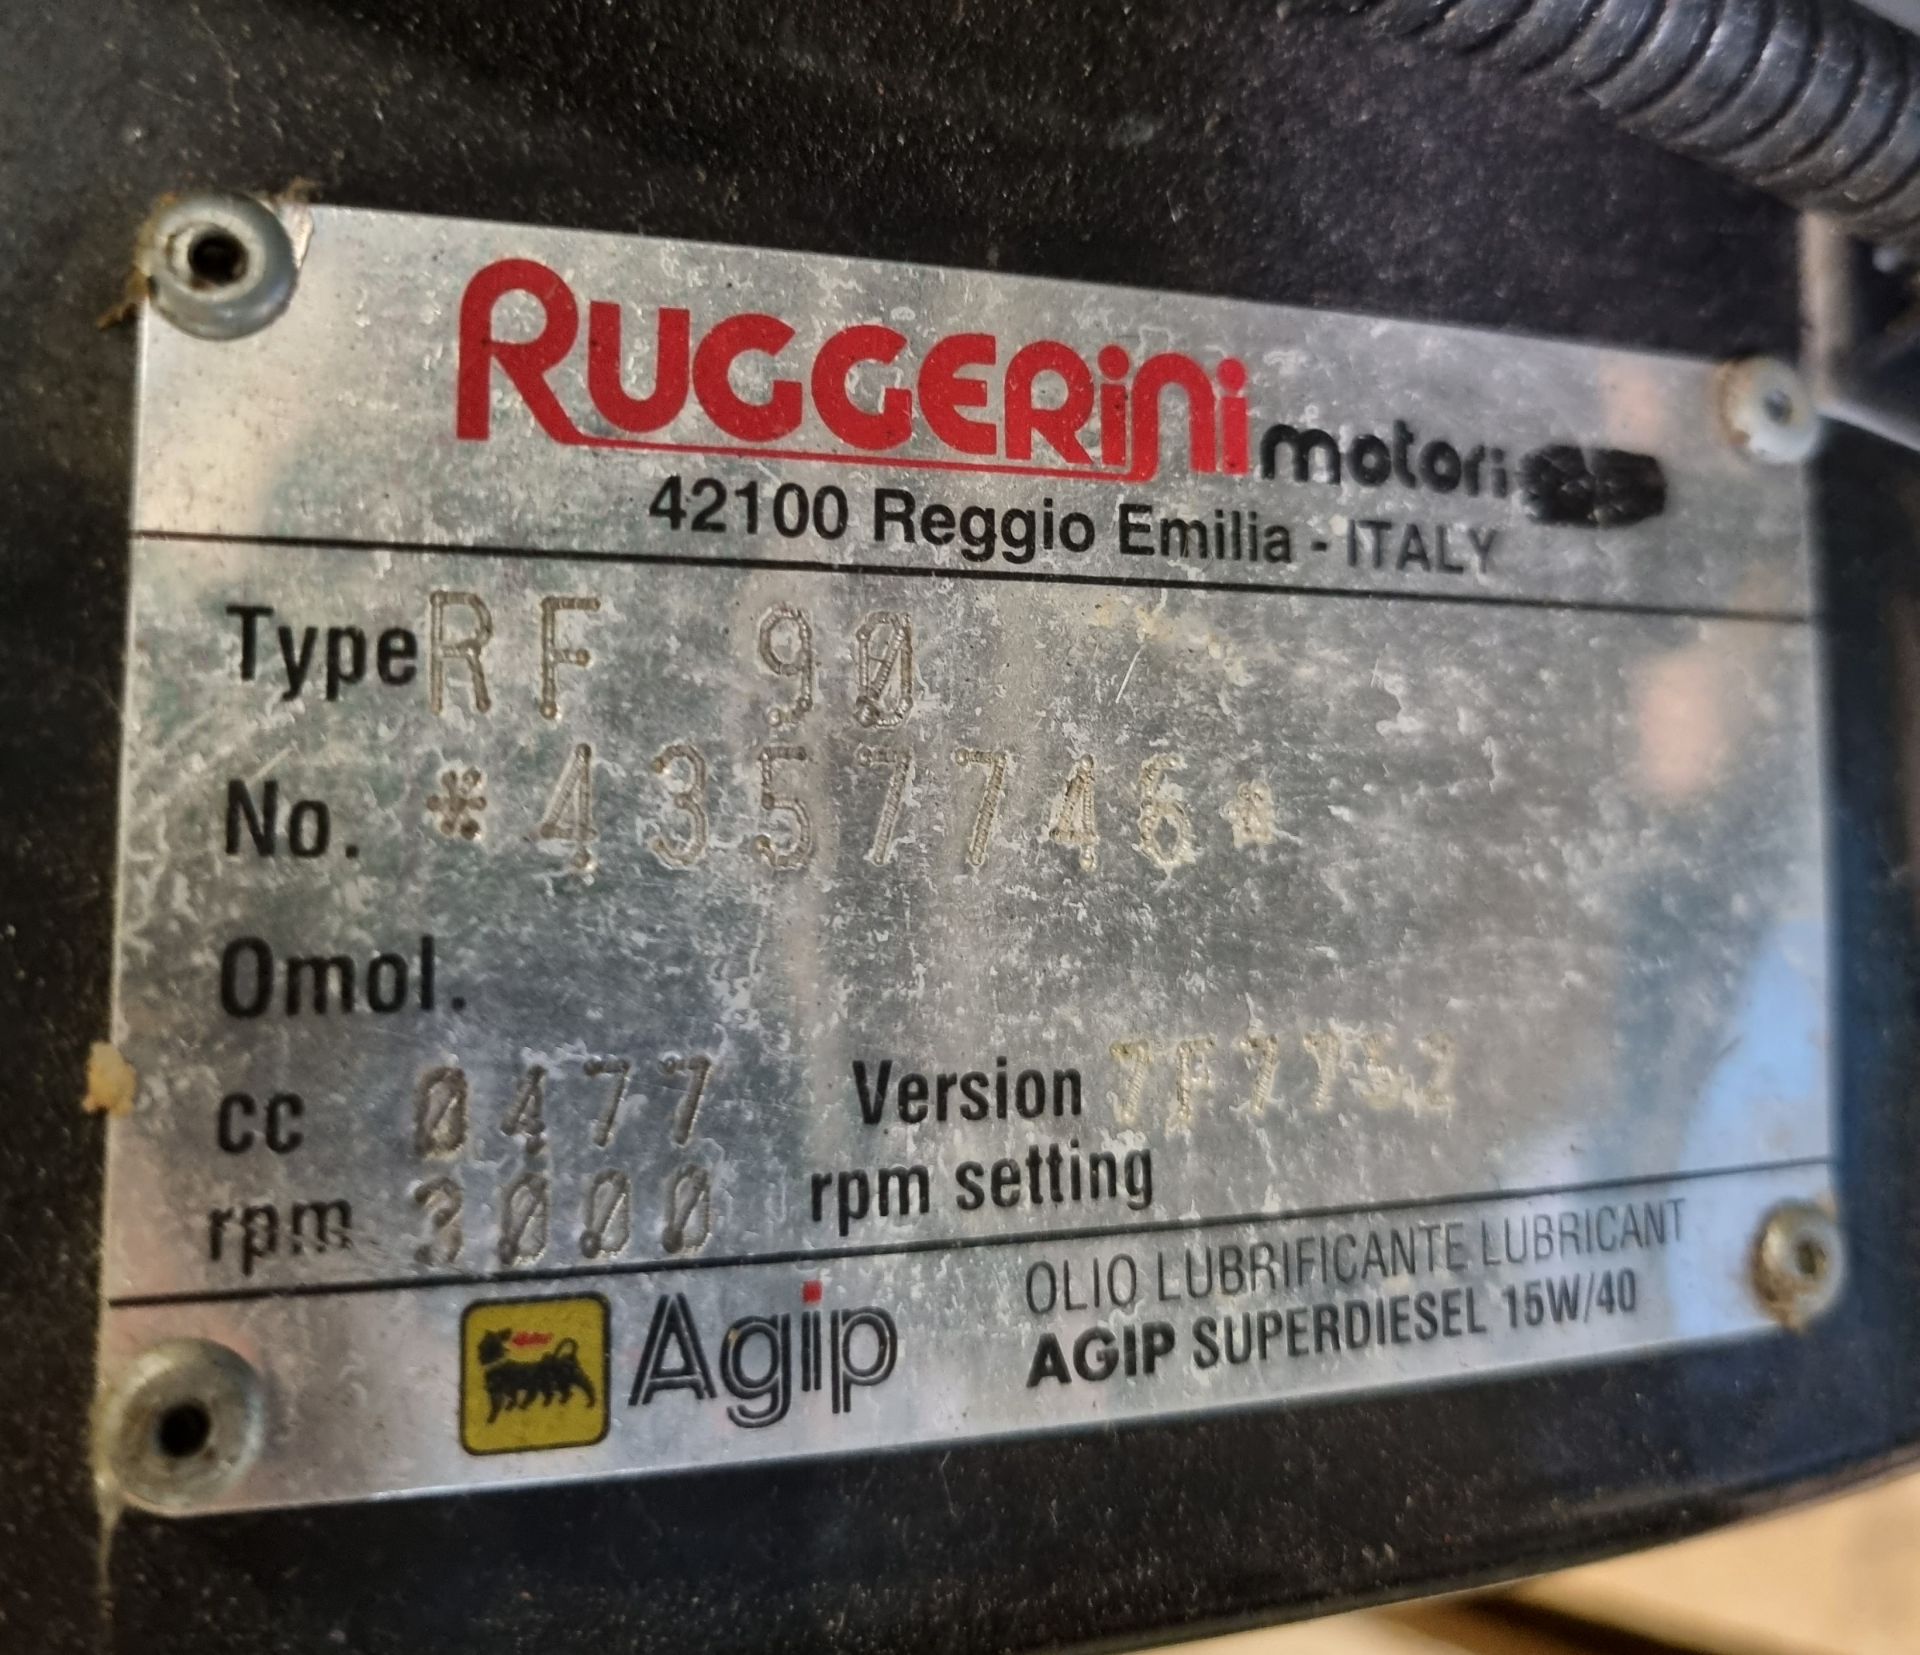 Ruggerini RF 90 diesel engine - 7KVA - 30A - 230V - 1ph - 50hz - RPM 1500 - Image 4 of 4